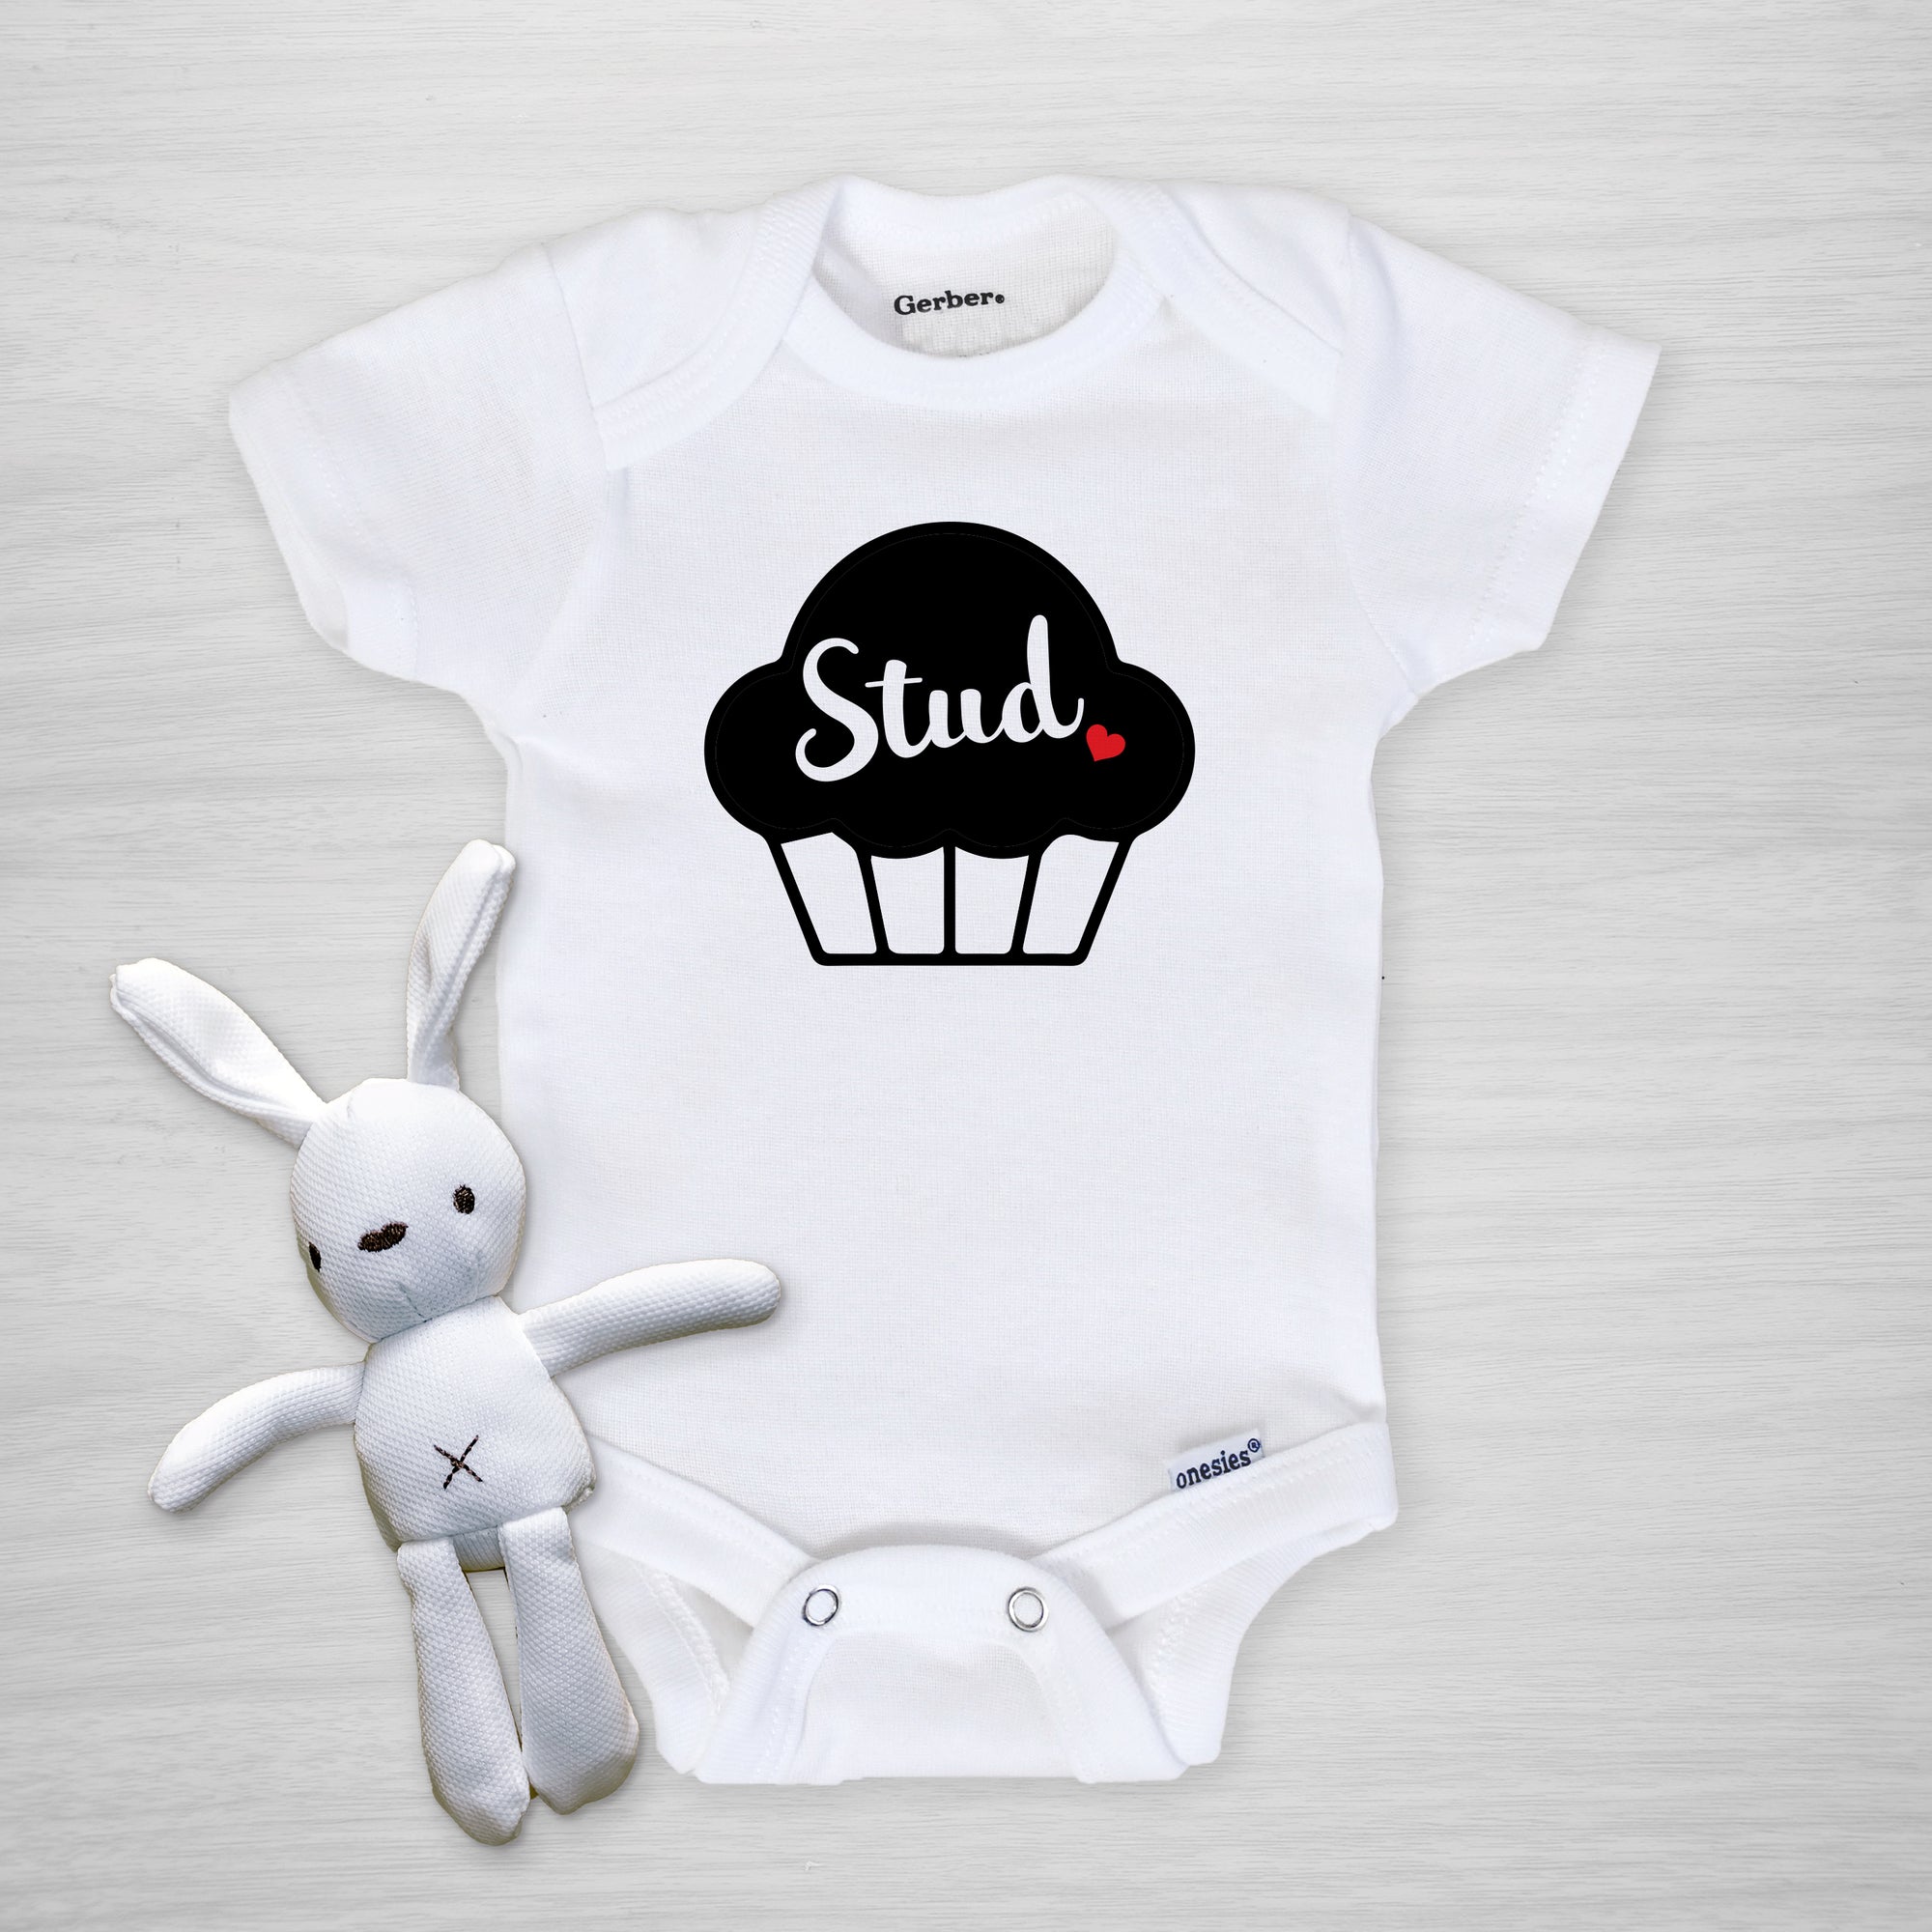 Stud Muffin Baby Gerber Onesie, Custom printed in Pipsy's Nashville studio, short sleeved